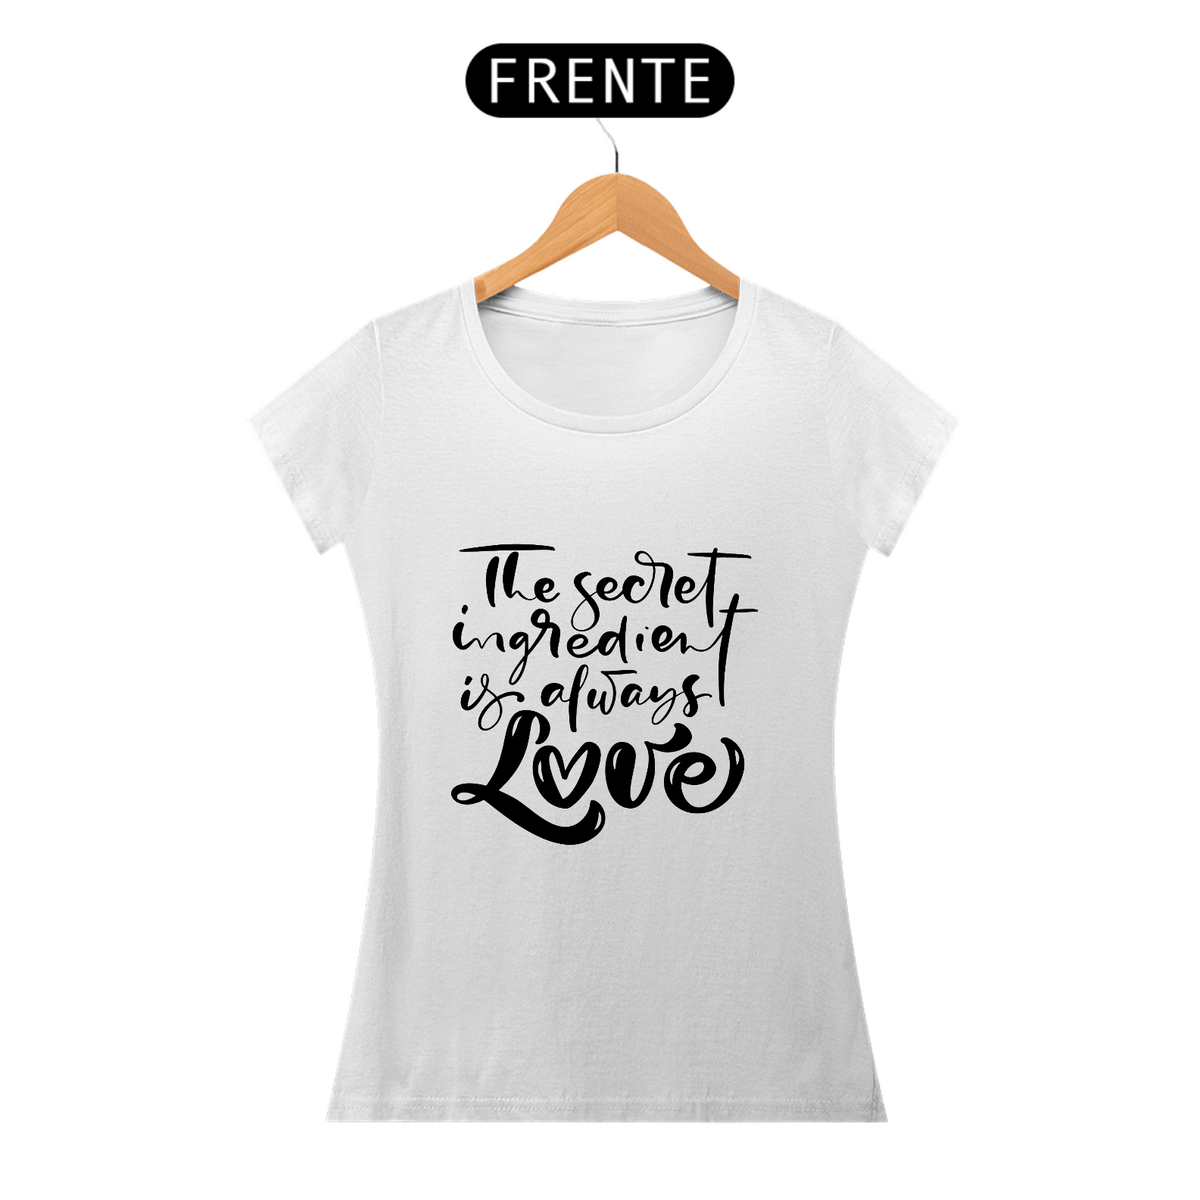 Nome do produto: Camiseta Baby long Love - The secret ingredient (letra preta)